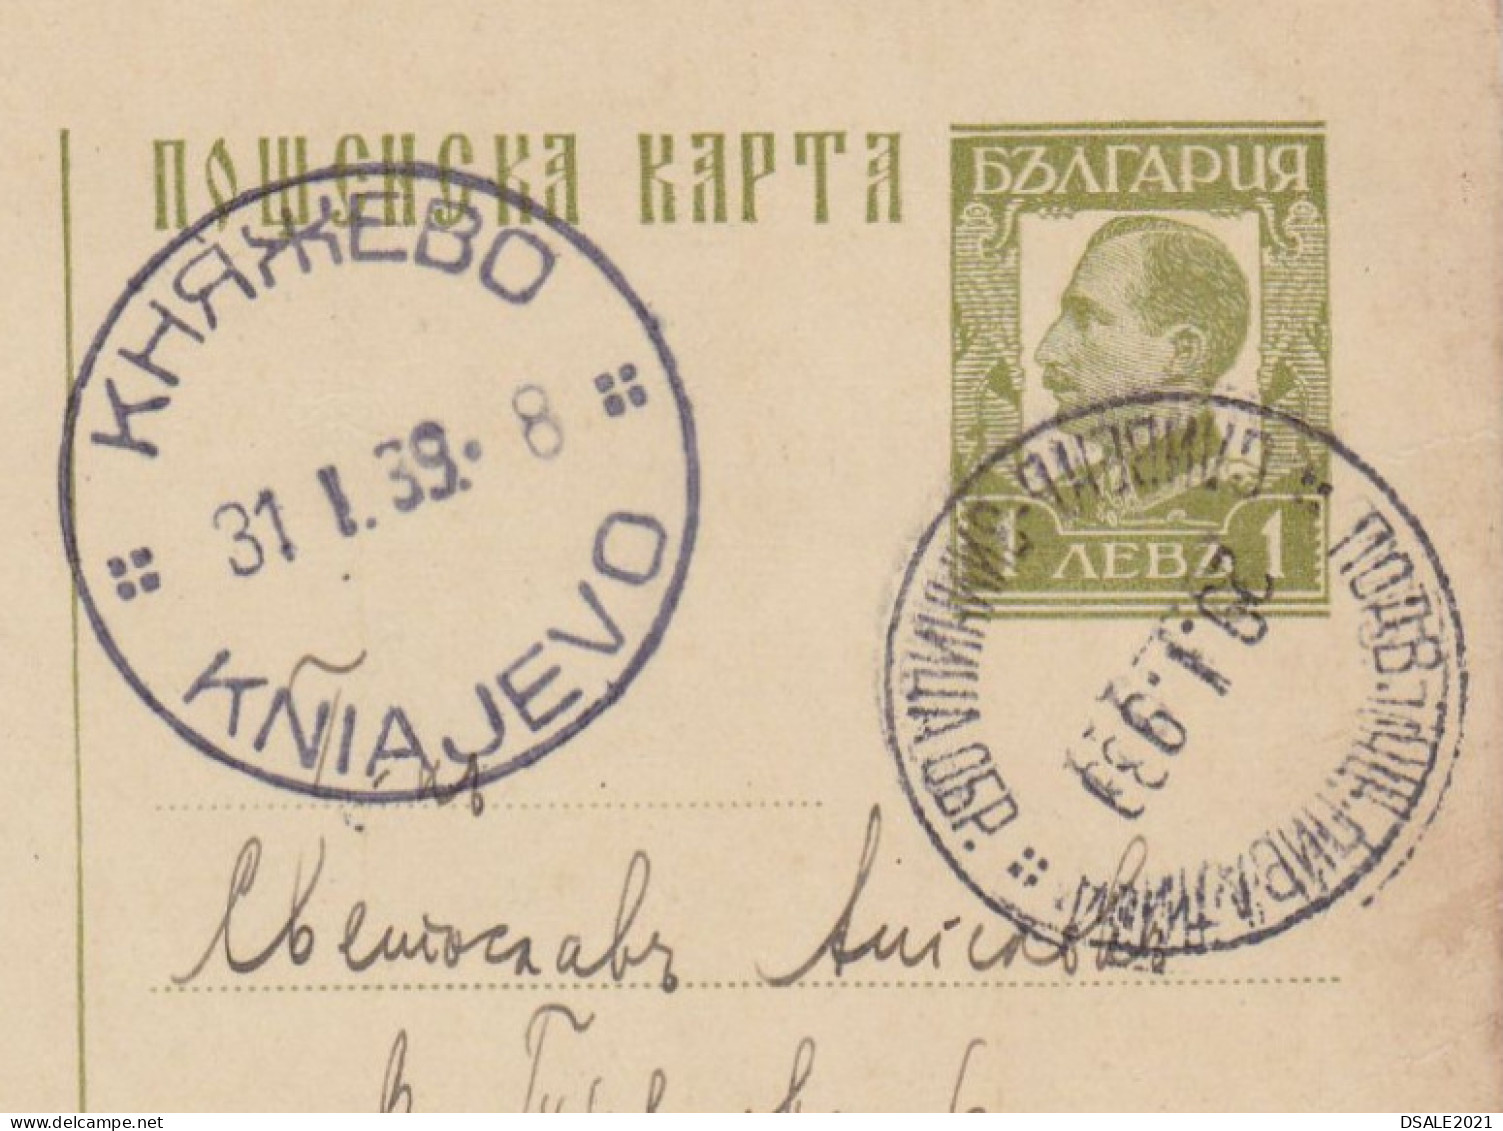 Bulgaria Bulgarie Bulgarian Postal Stationery Card, 1939 Sent Via Railway TPO Zug Bahnpost (SLIVEN-ZIMNITZA Back) /699 - Cartoline Postali